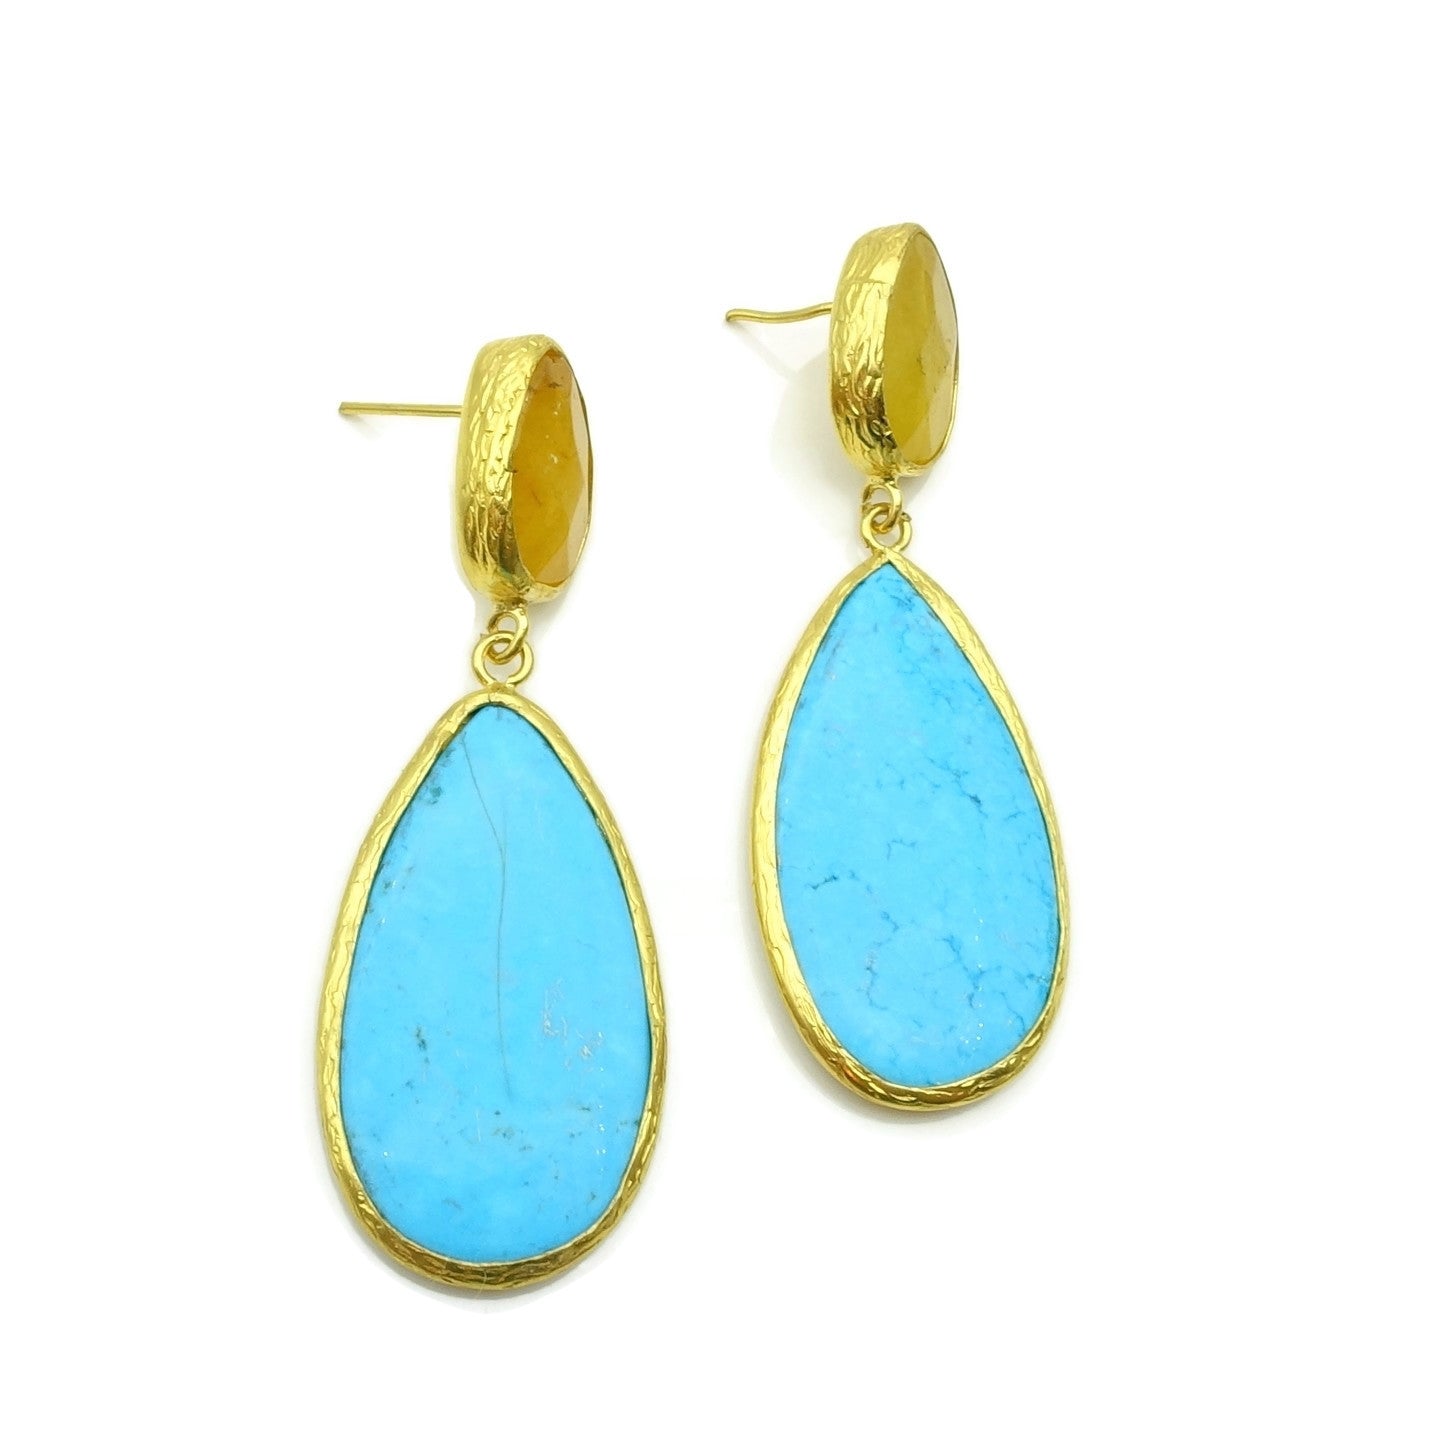 Aylas Turquoise Agate semi precious gemstone earrings - 21ct Gold plated handmade